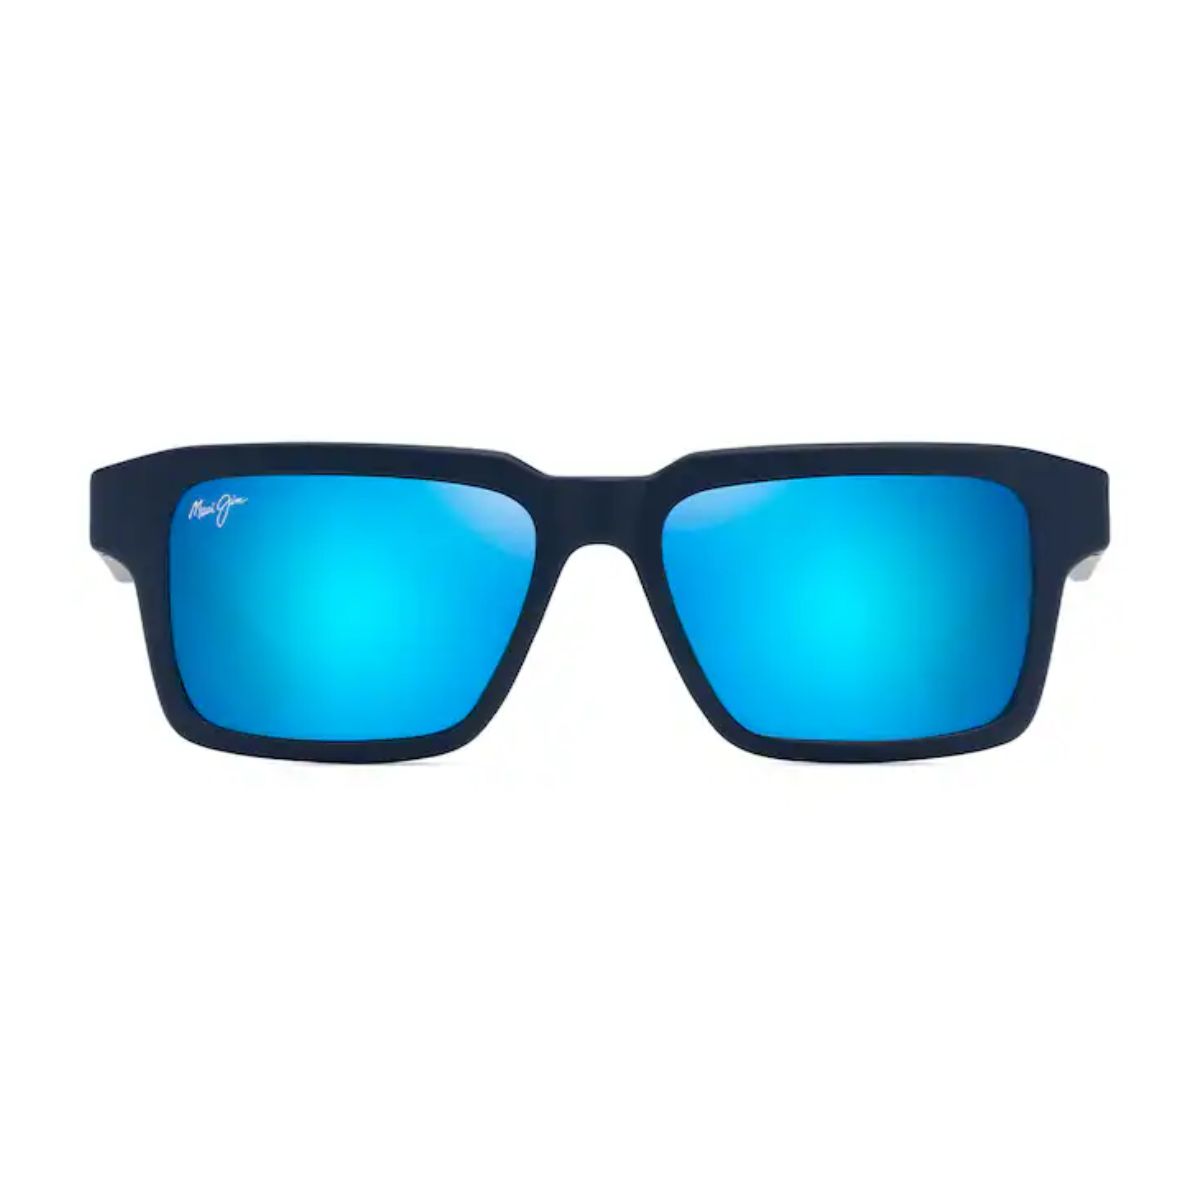 "Summer Stylish Square Maui Jim Polarized Sunglasses For Mens At Optorium"